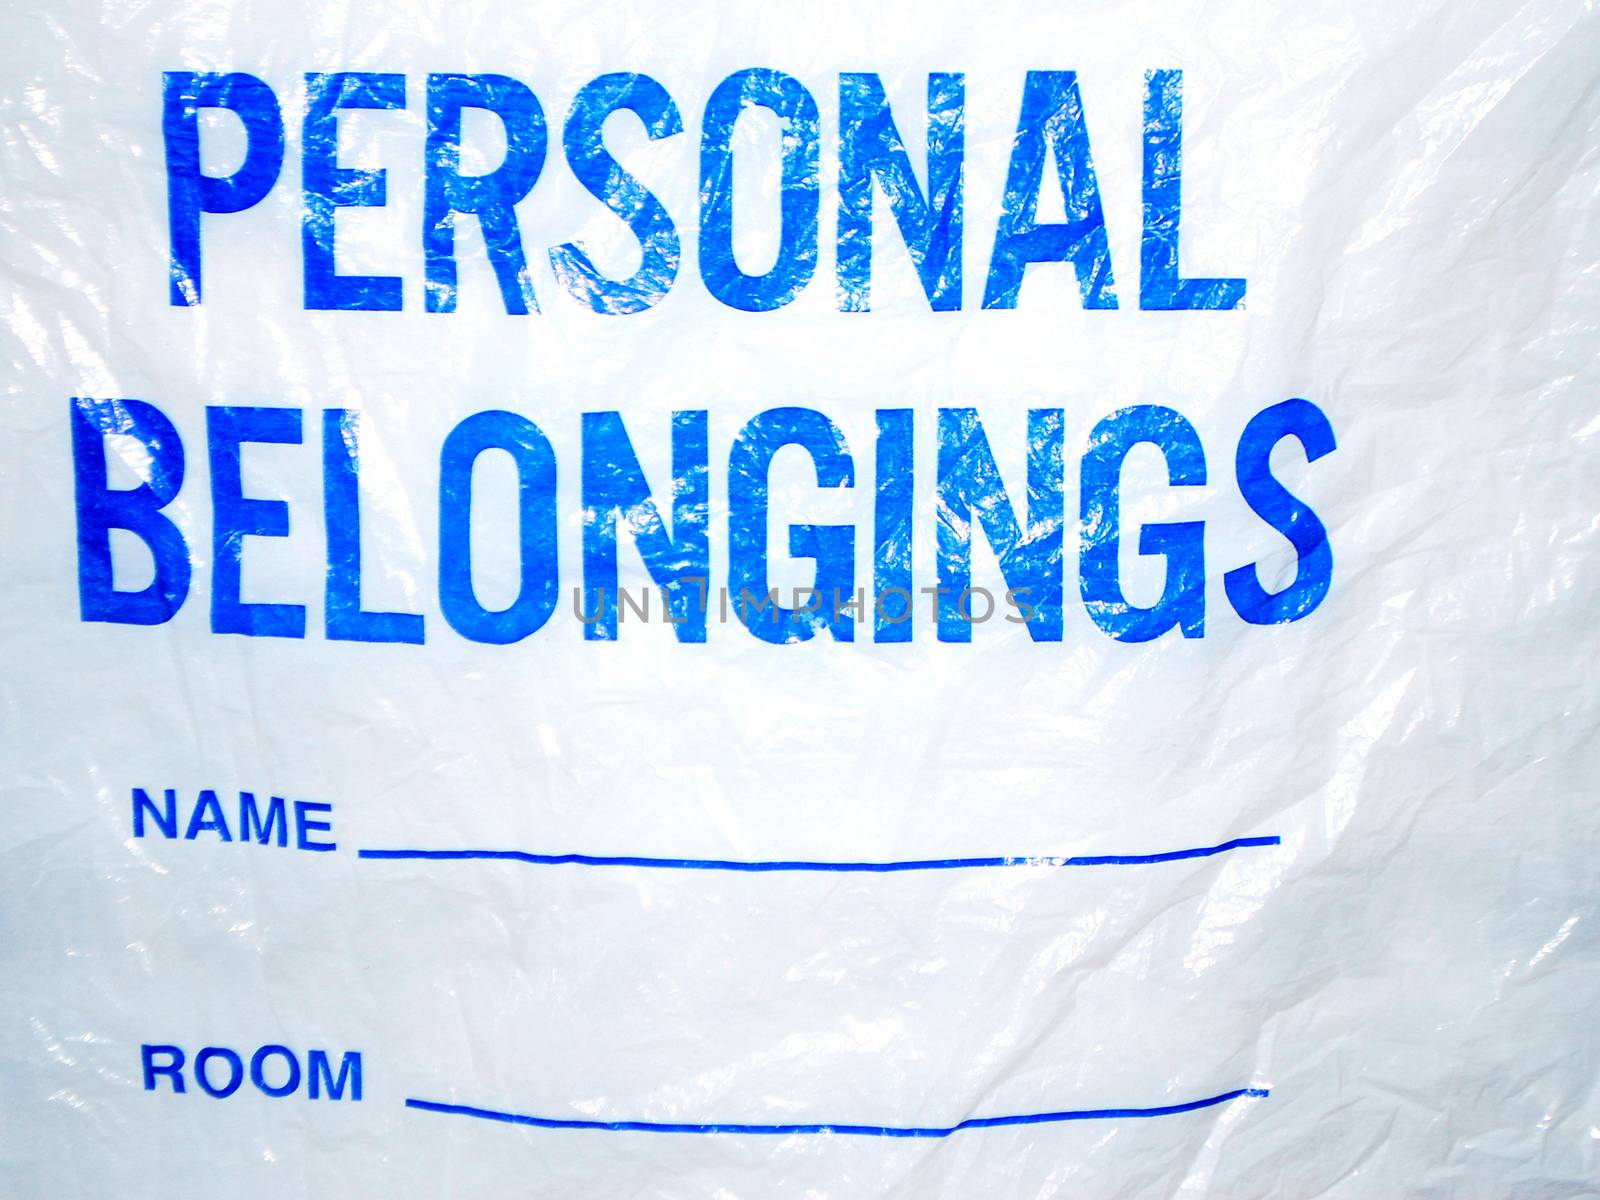 Personal belongings bag. by oscarcwilliams